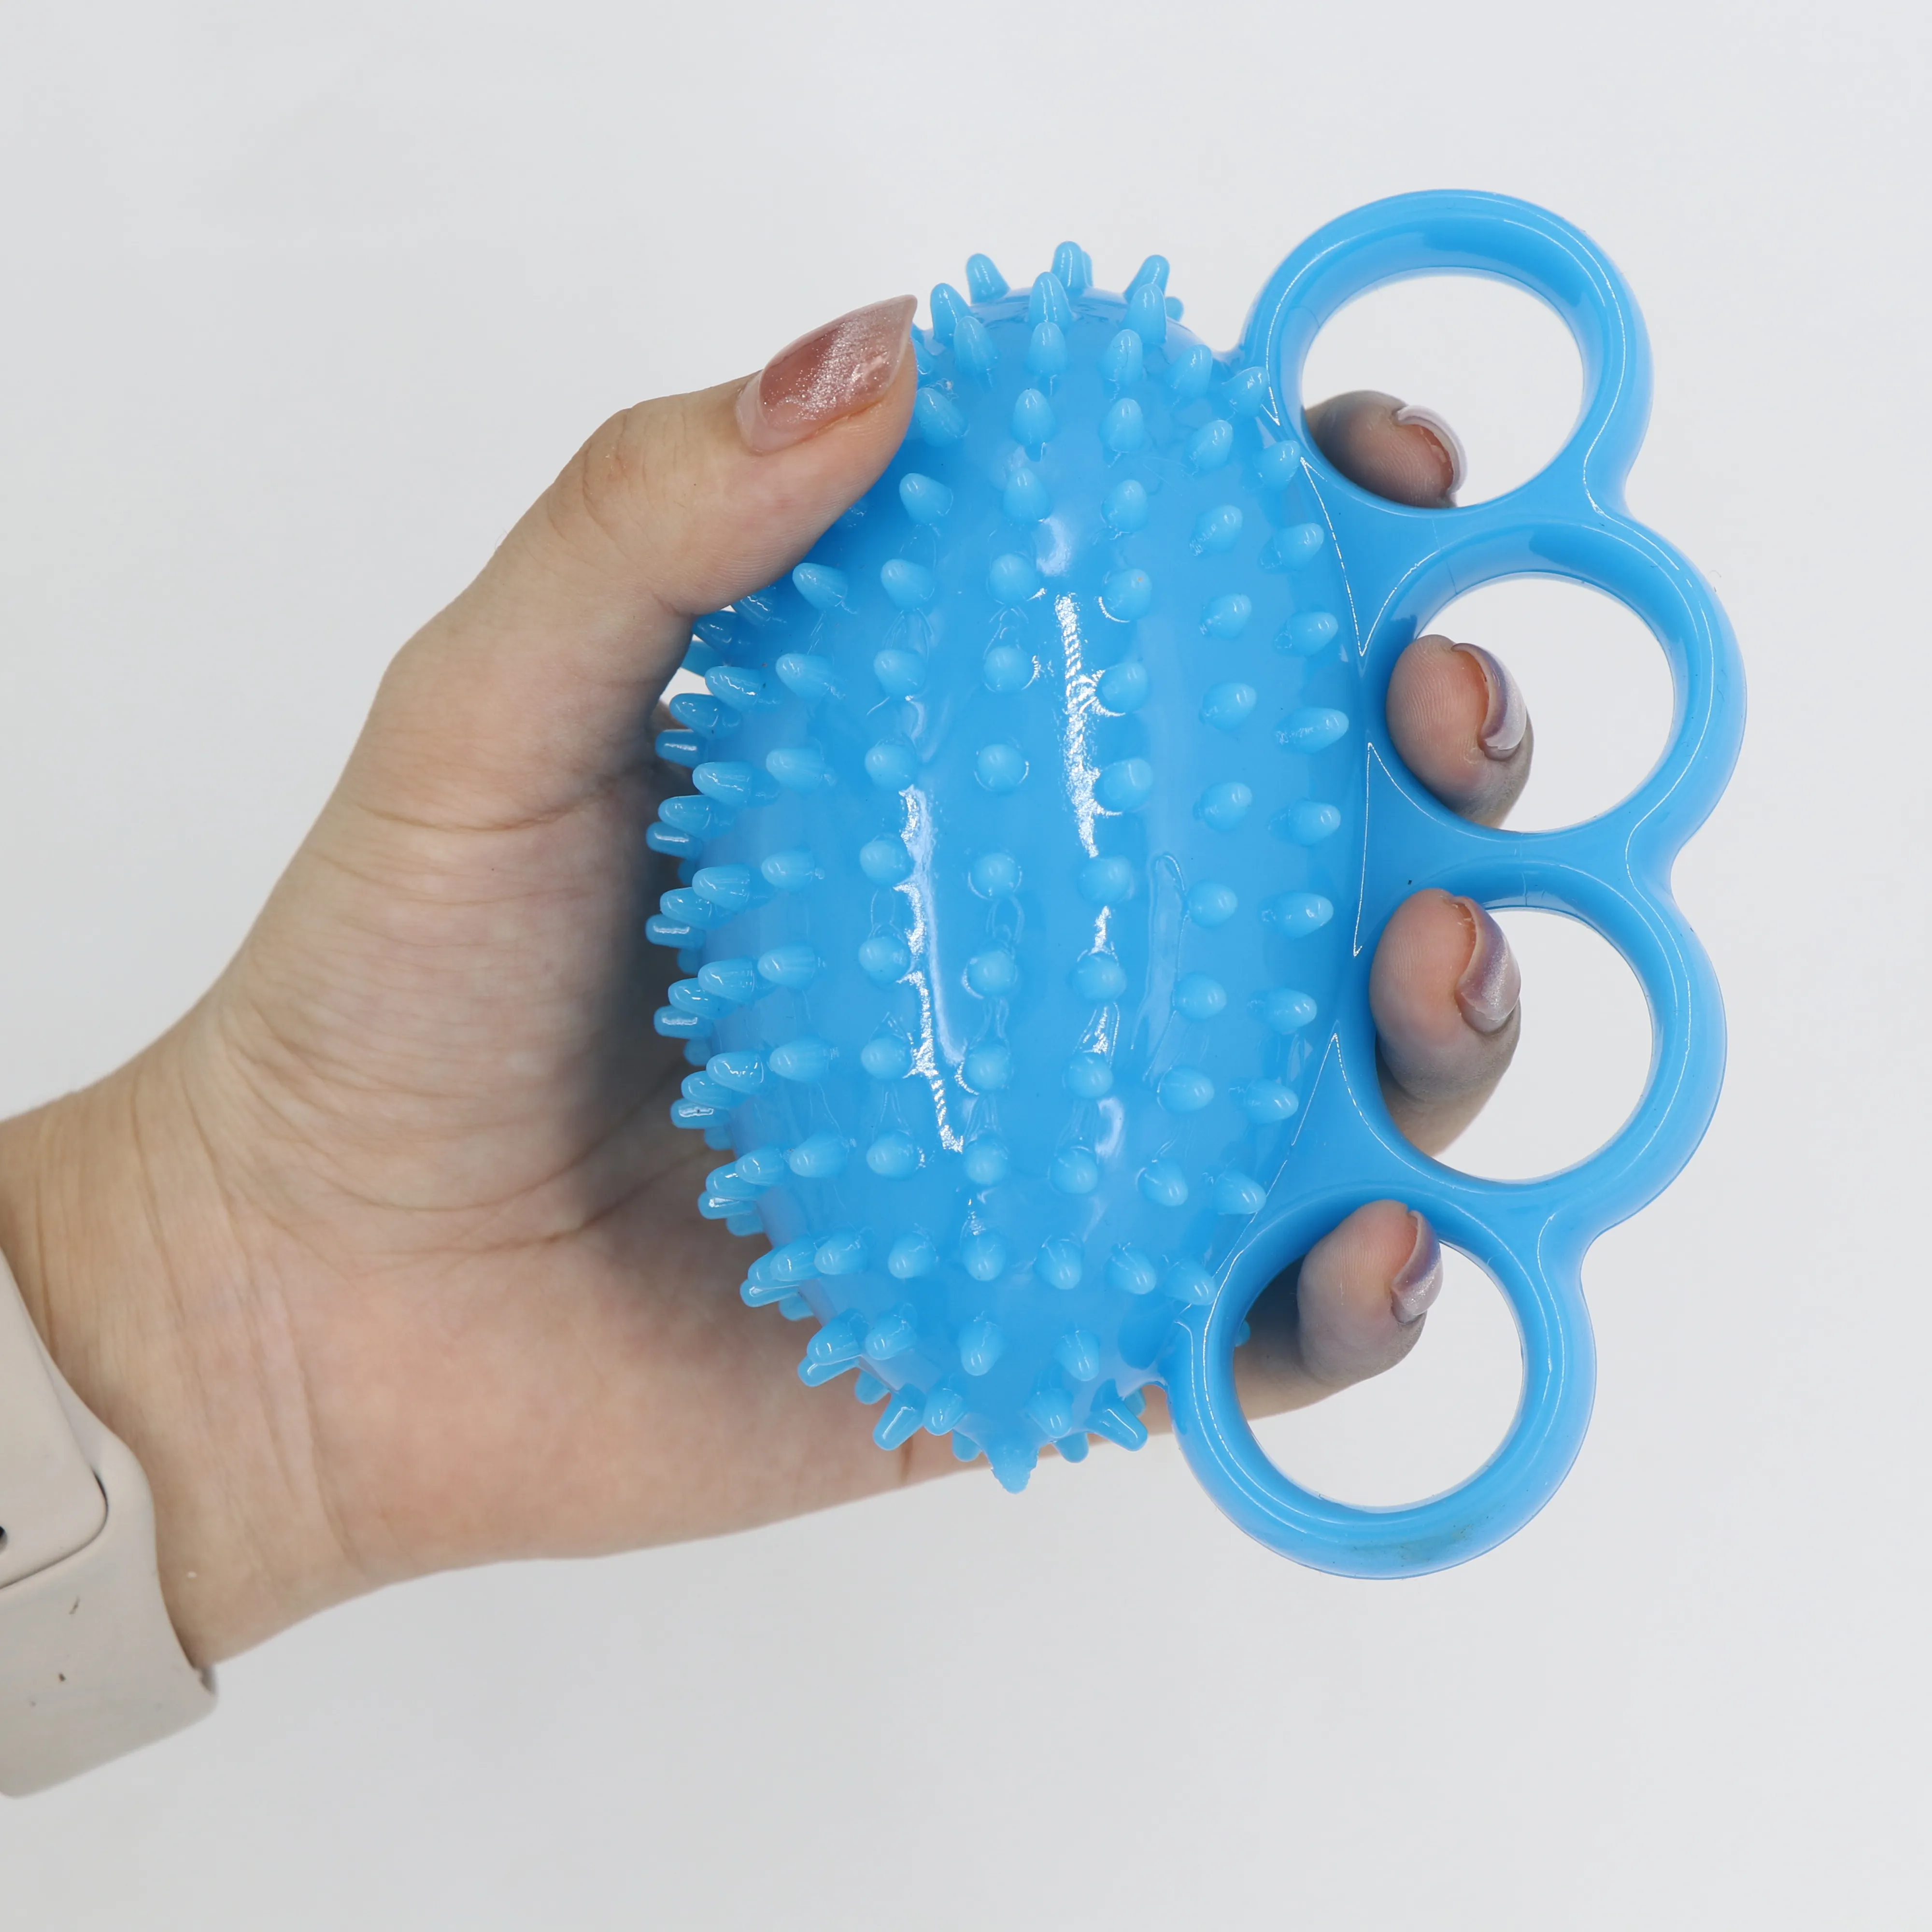 New PVC Spiky Finger Stretcher Hand Grip Finger Massage ball